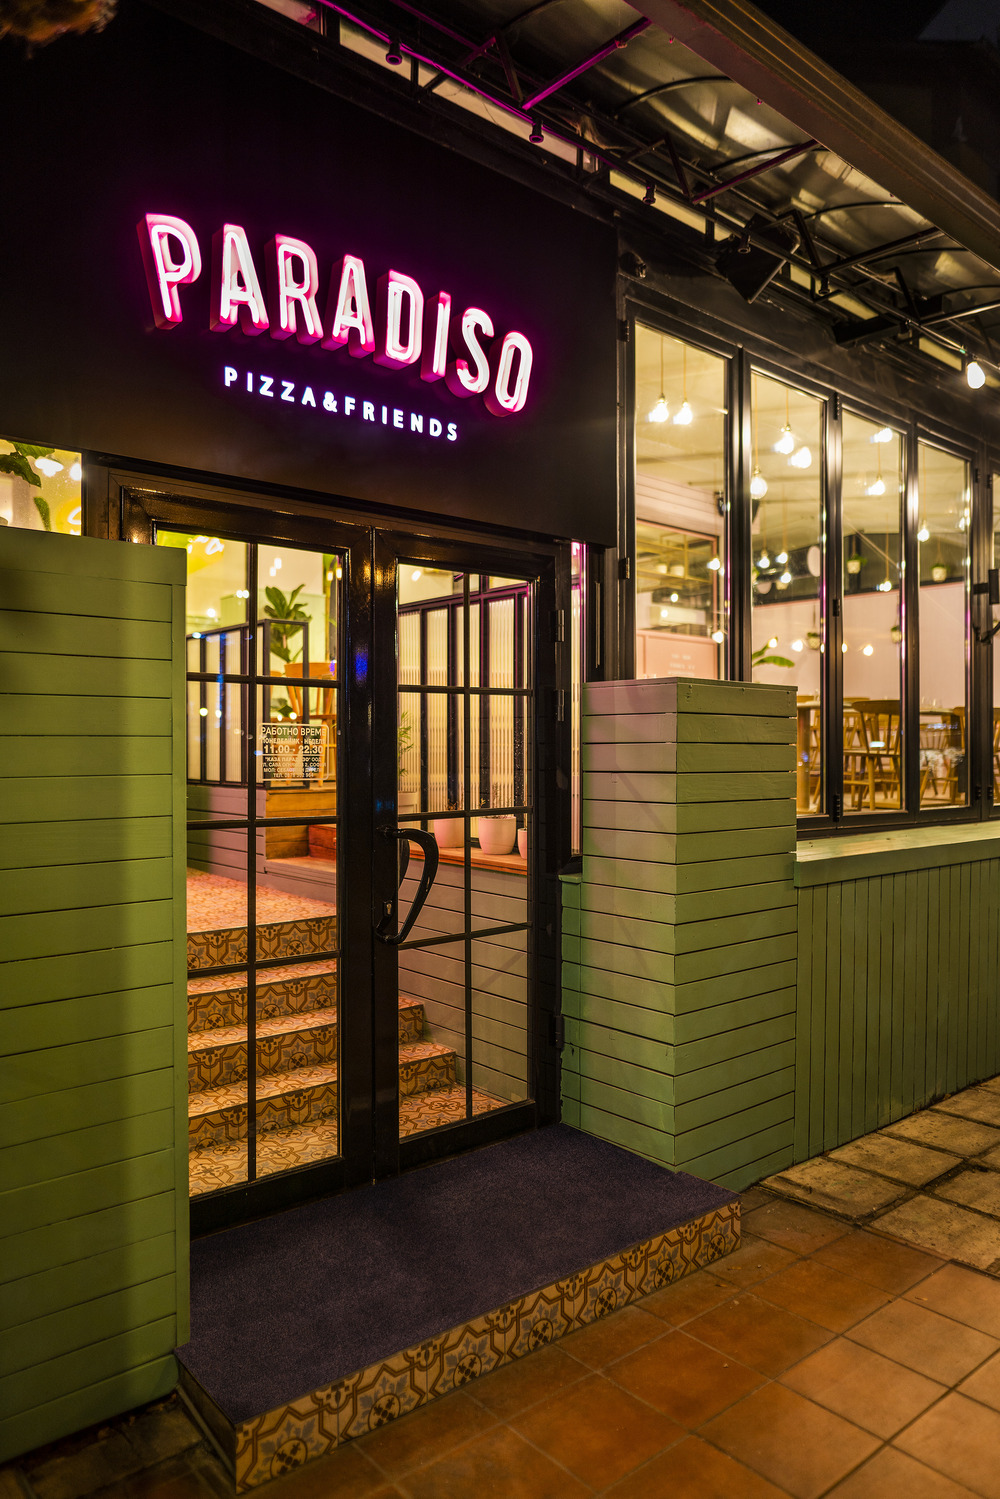 Paradiso Pizza & Friends